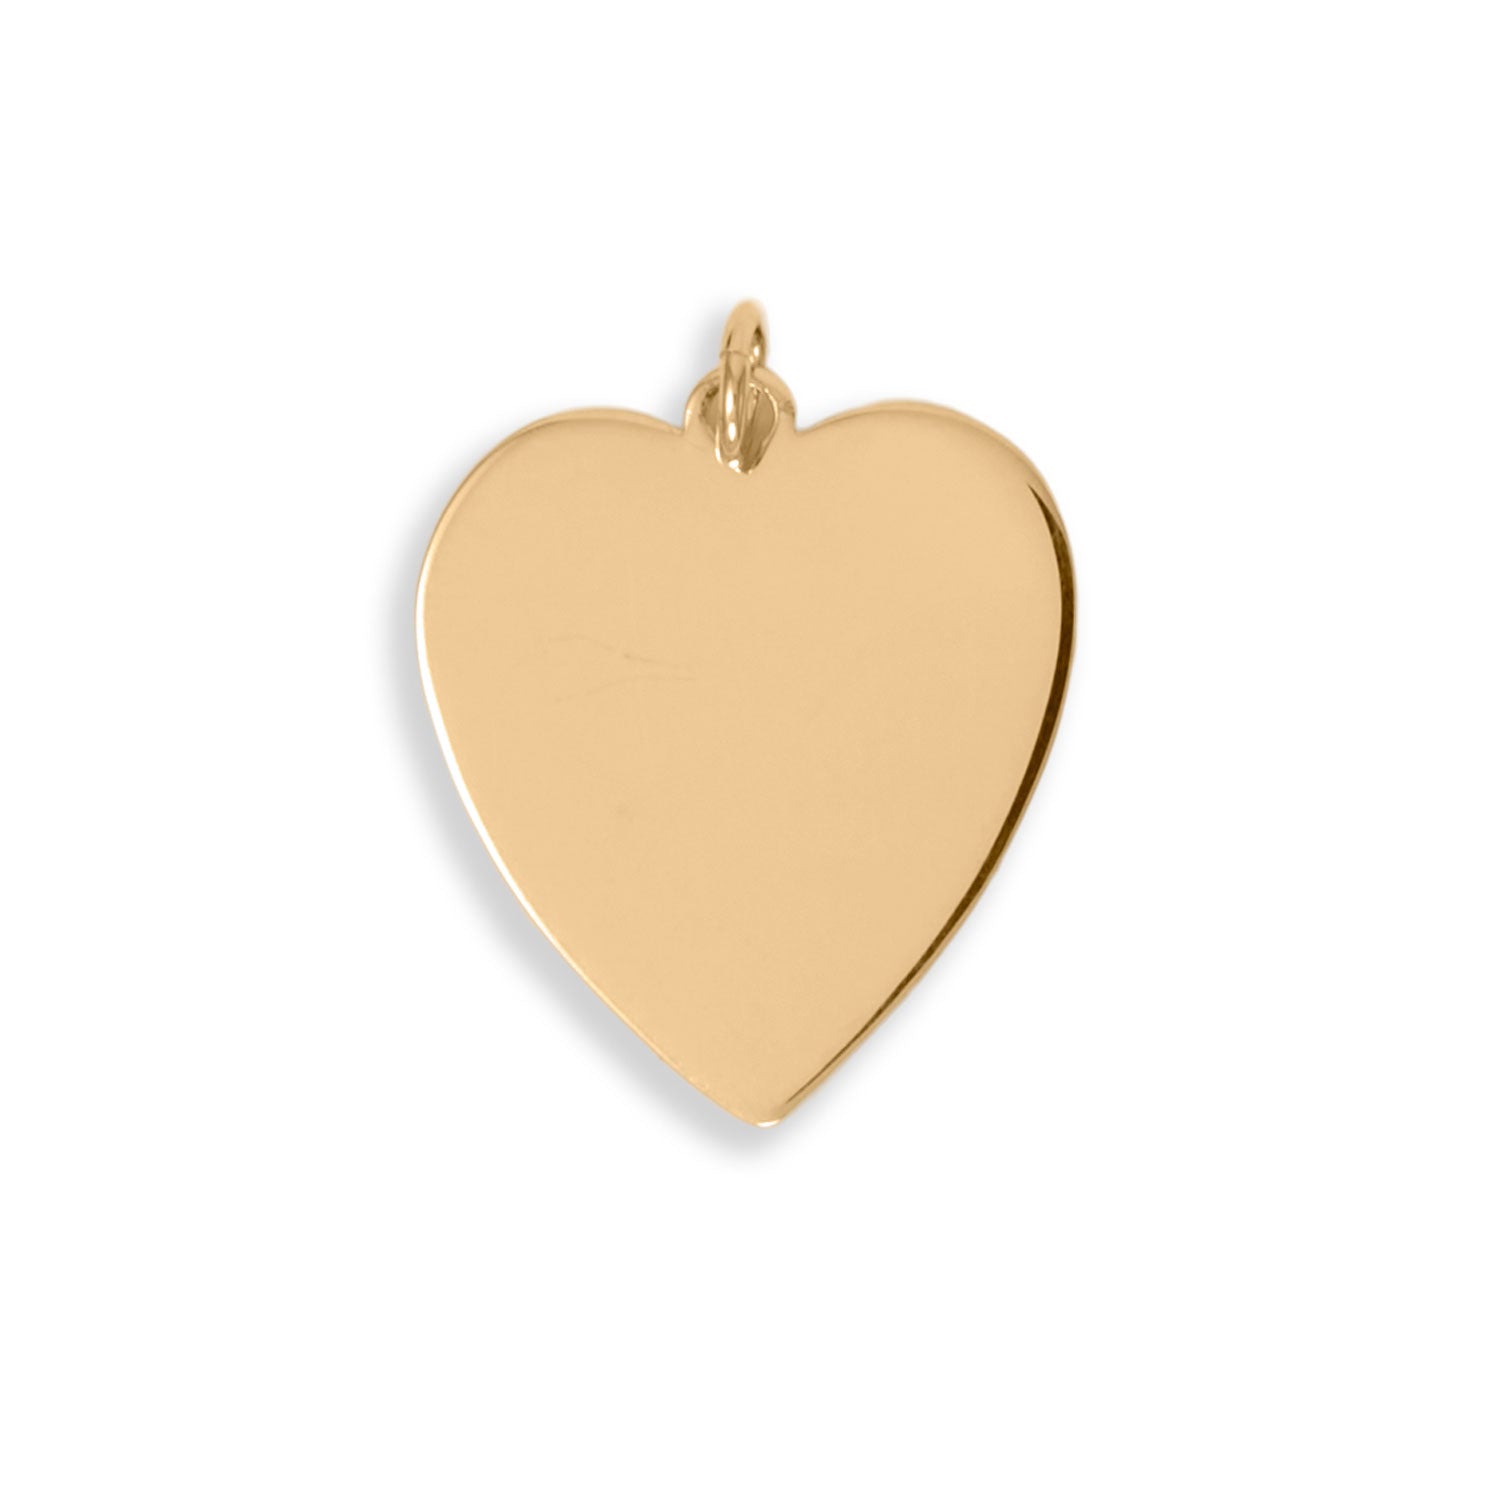 14/20 Gold Filled Large Engravable Heart Pendant - Wholesale